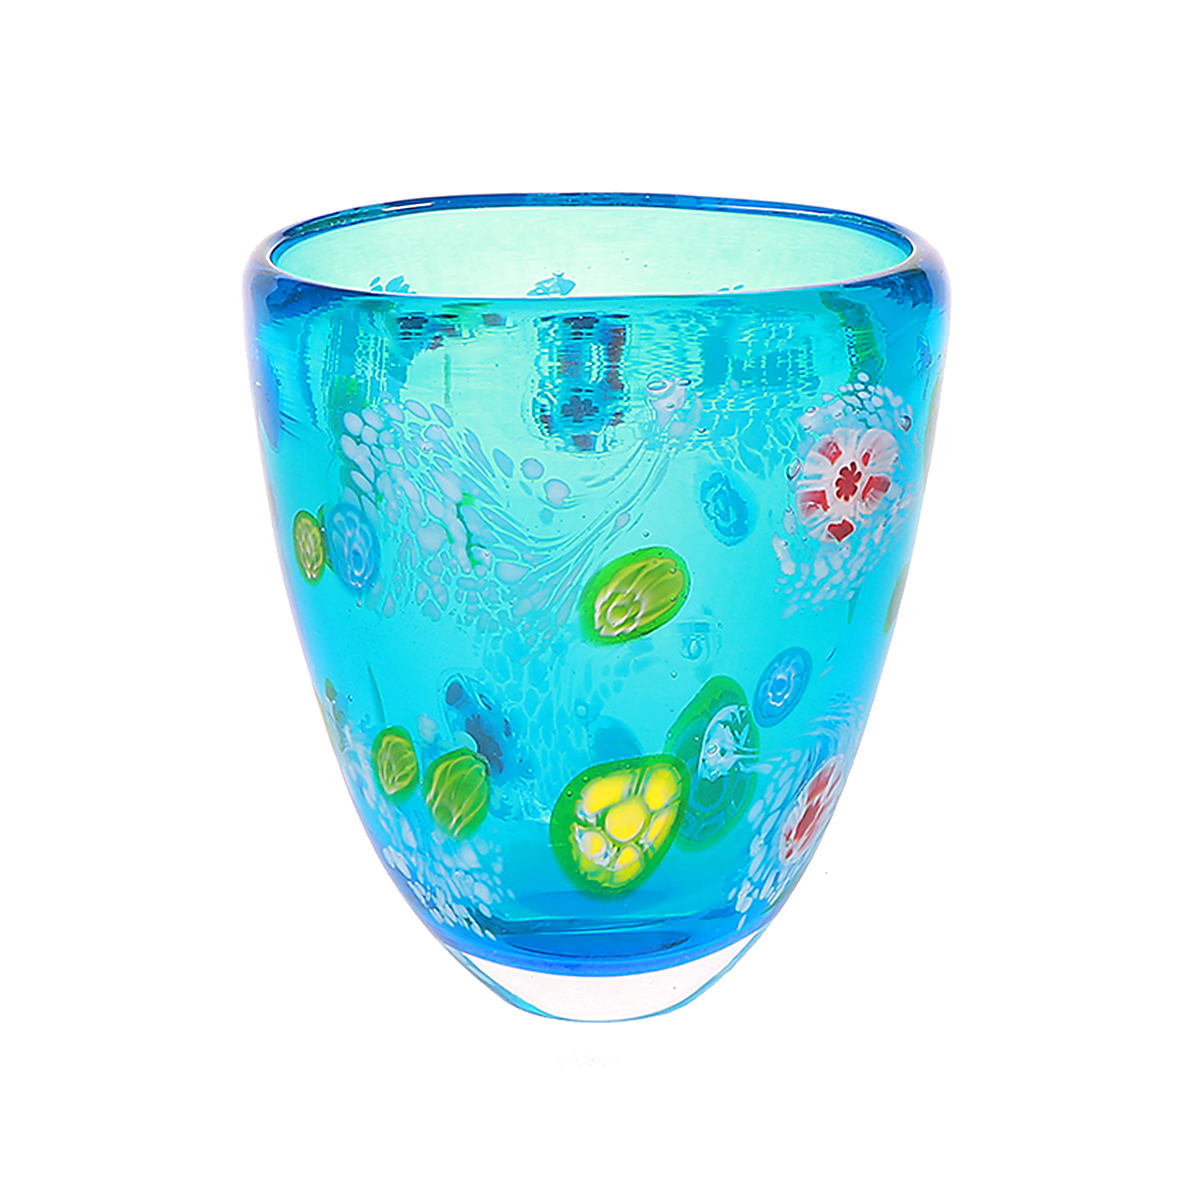 Ваза Art glass Водопад 18 см ваза hakbijl glass jenna д39x117 см